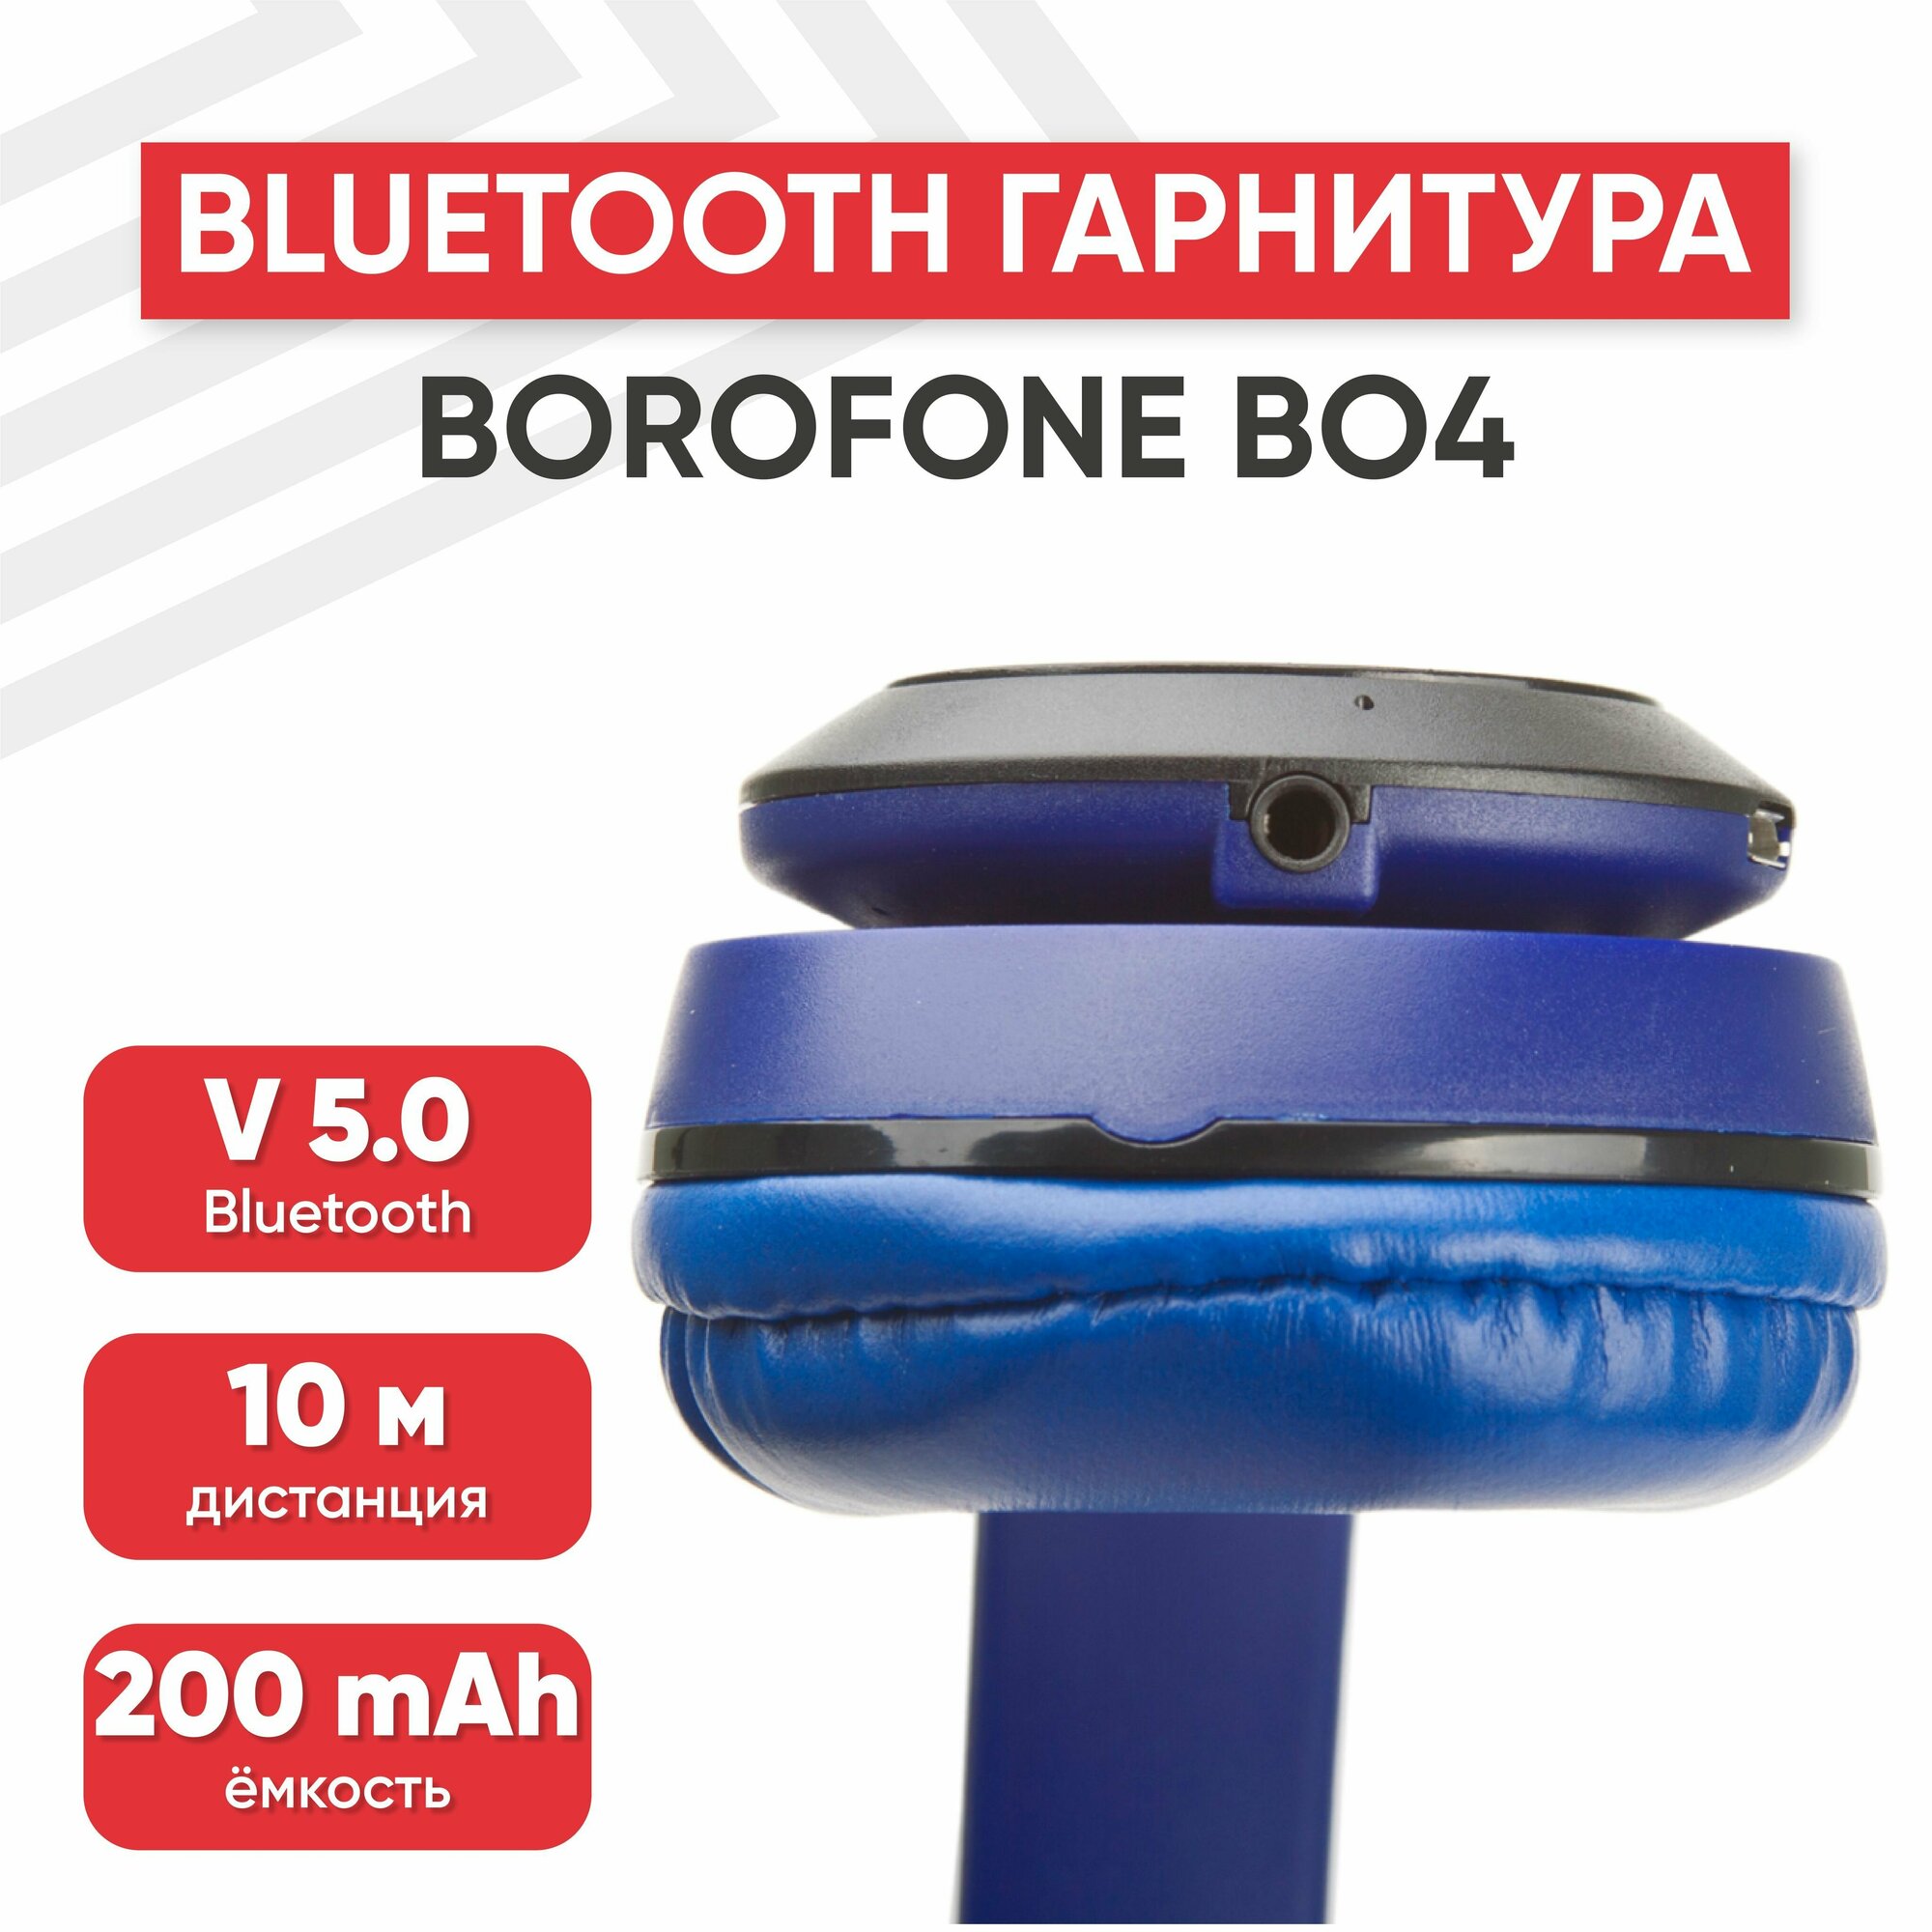 Bluetooth гарнитура Borofone BO4 Charming Rhyme, BT 5.0, AUX, 200мАч, MicroSD, накладные, синие с черным